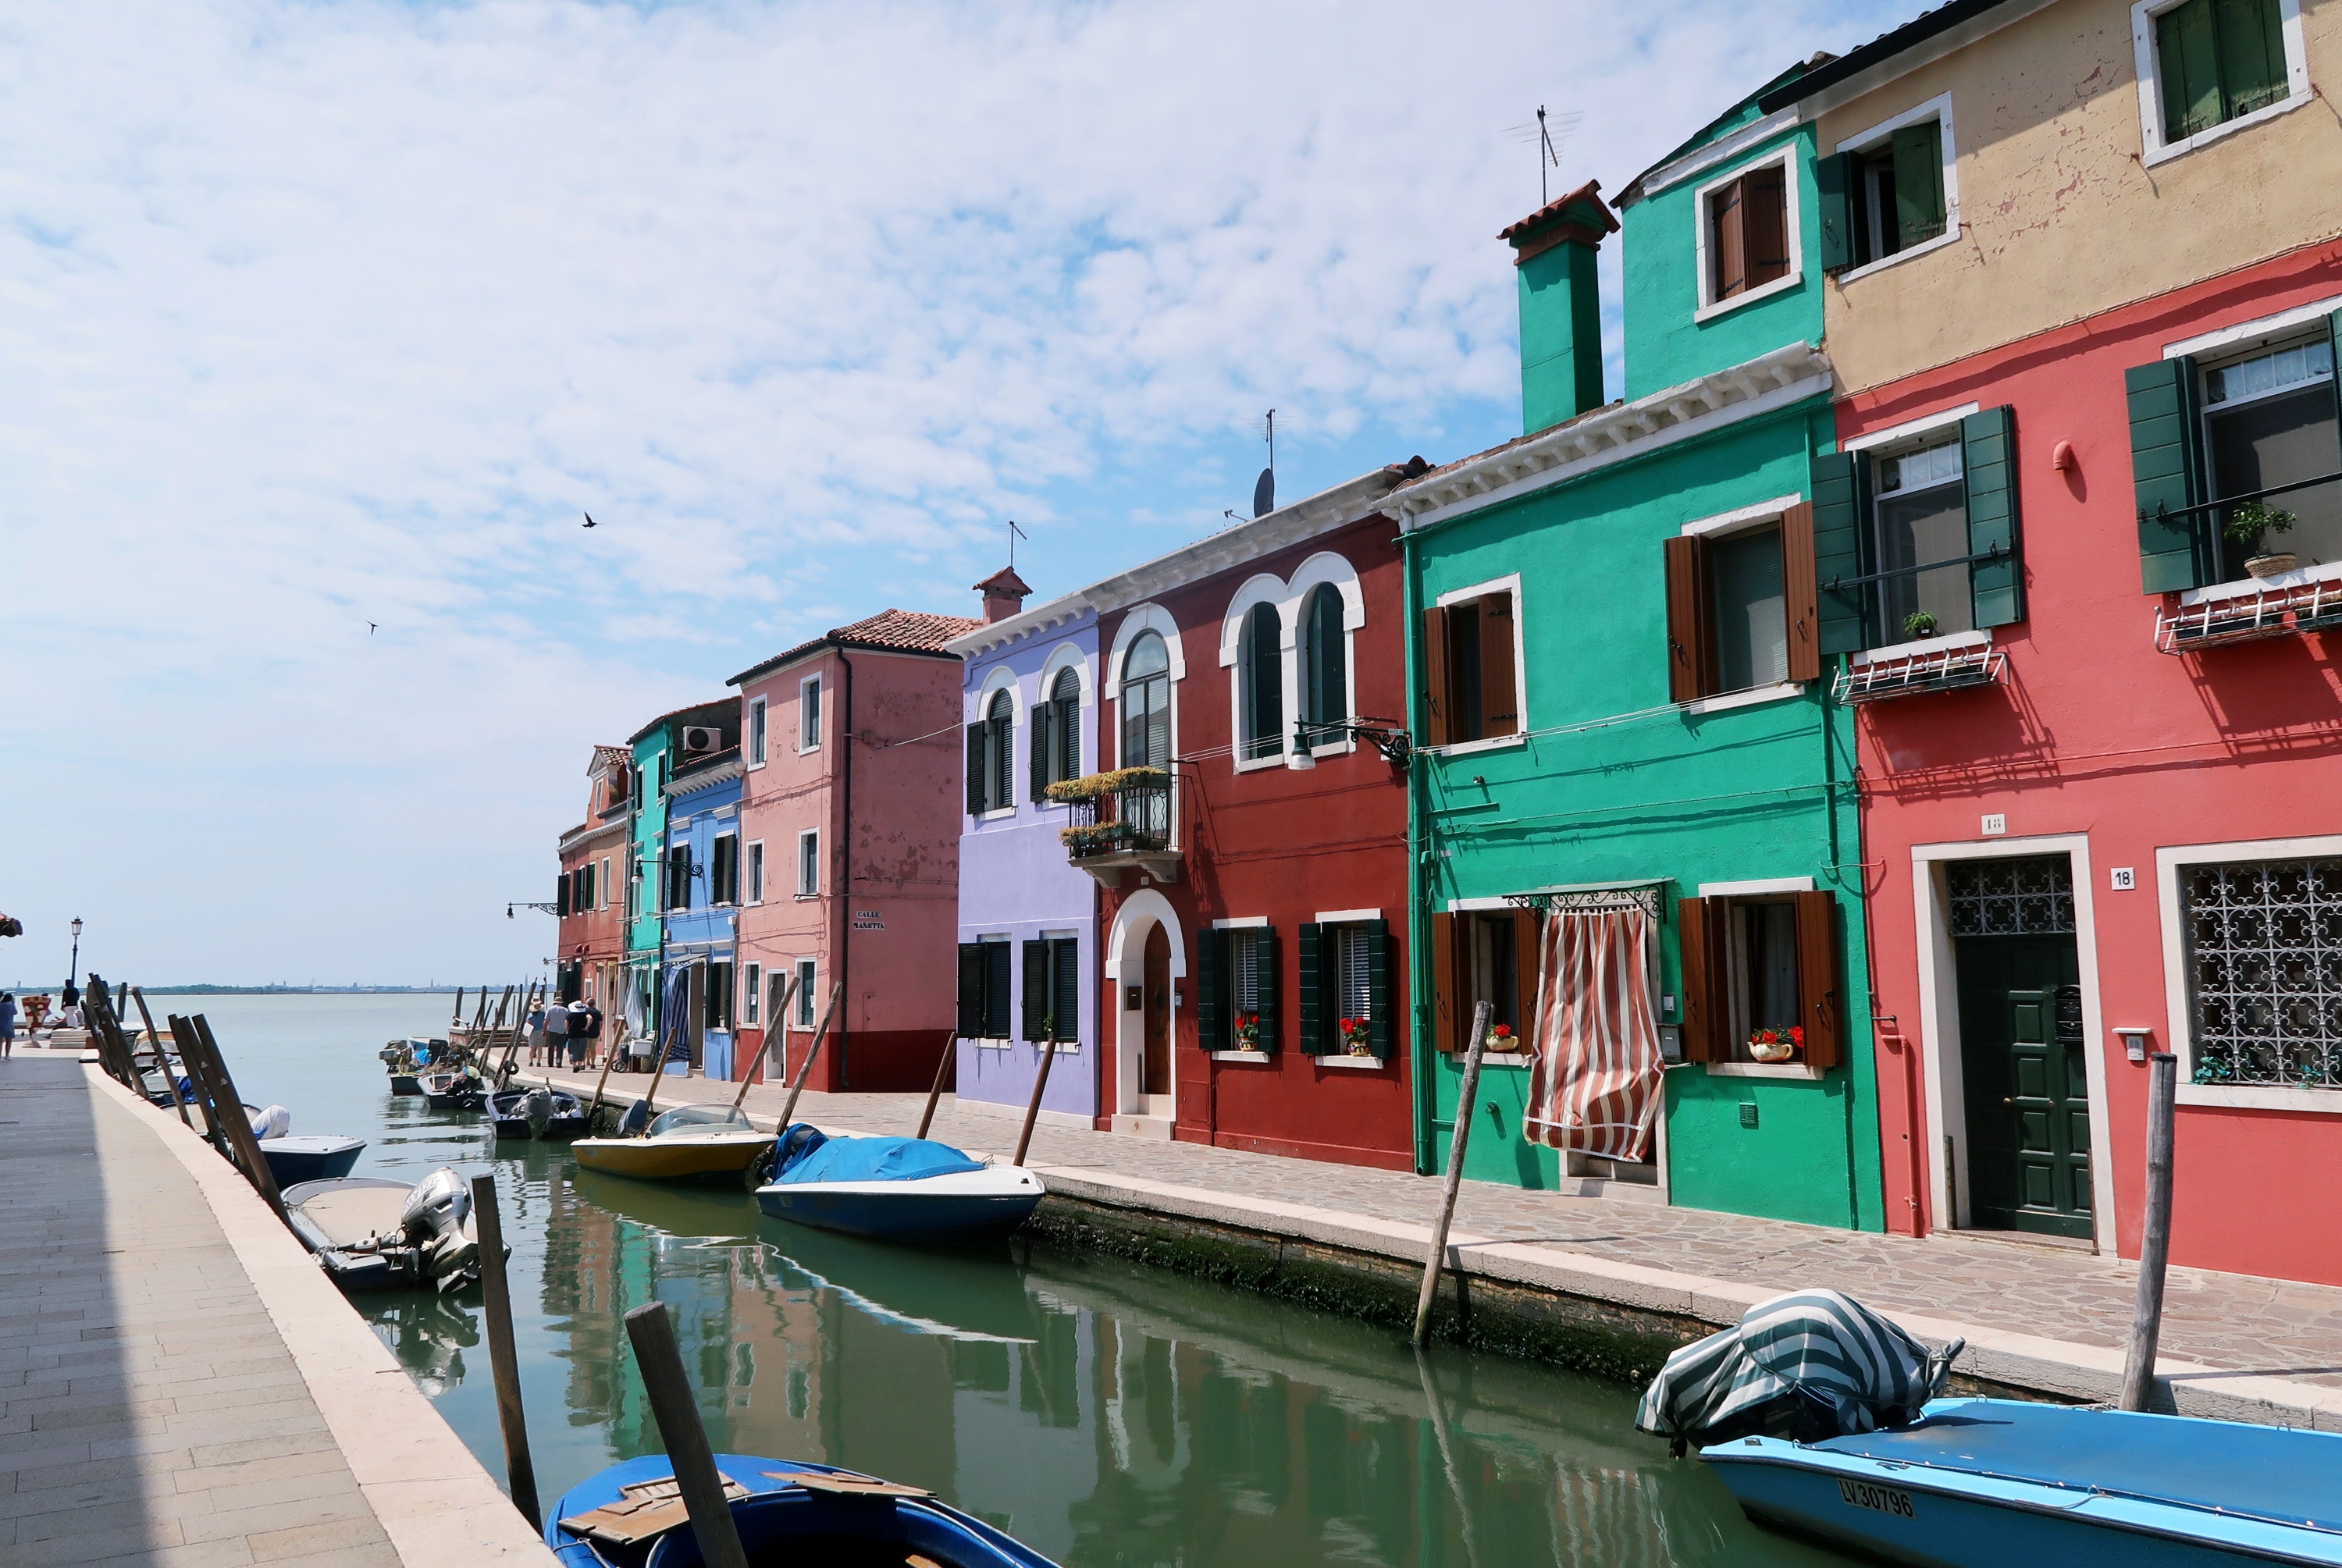 Burano Venice Italy - The LDN Diaries Travel Blog